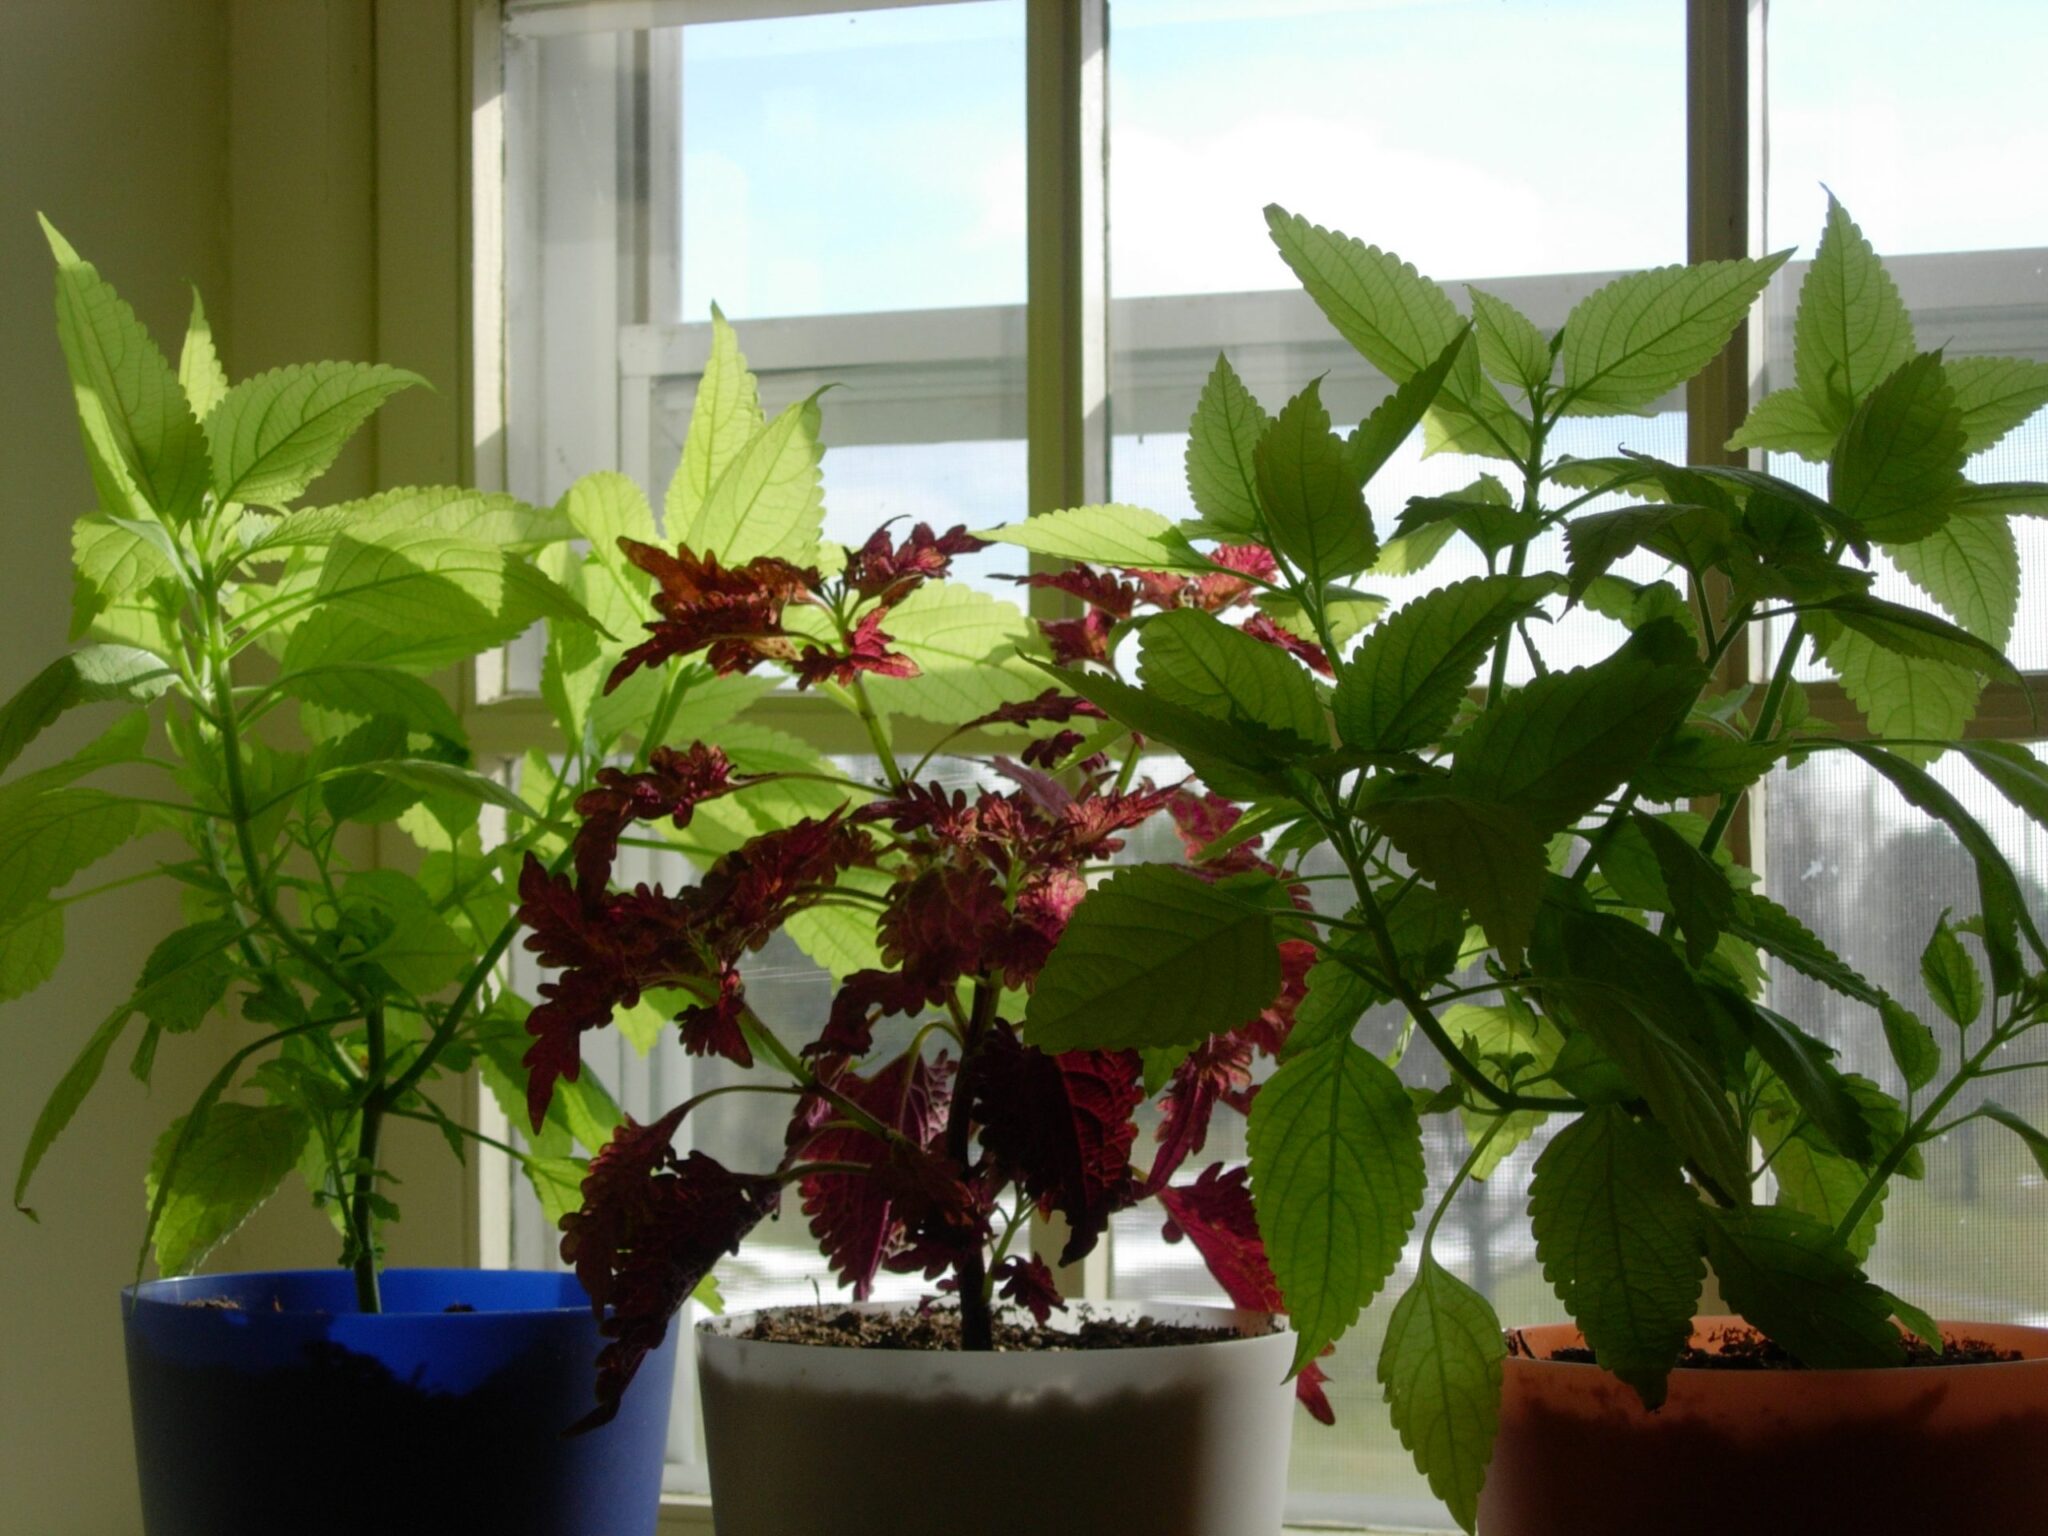 Three kitchen herbs grow large in the kitchen window